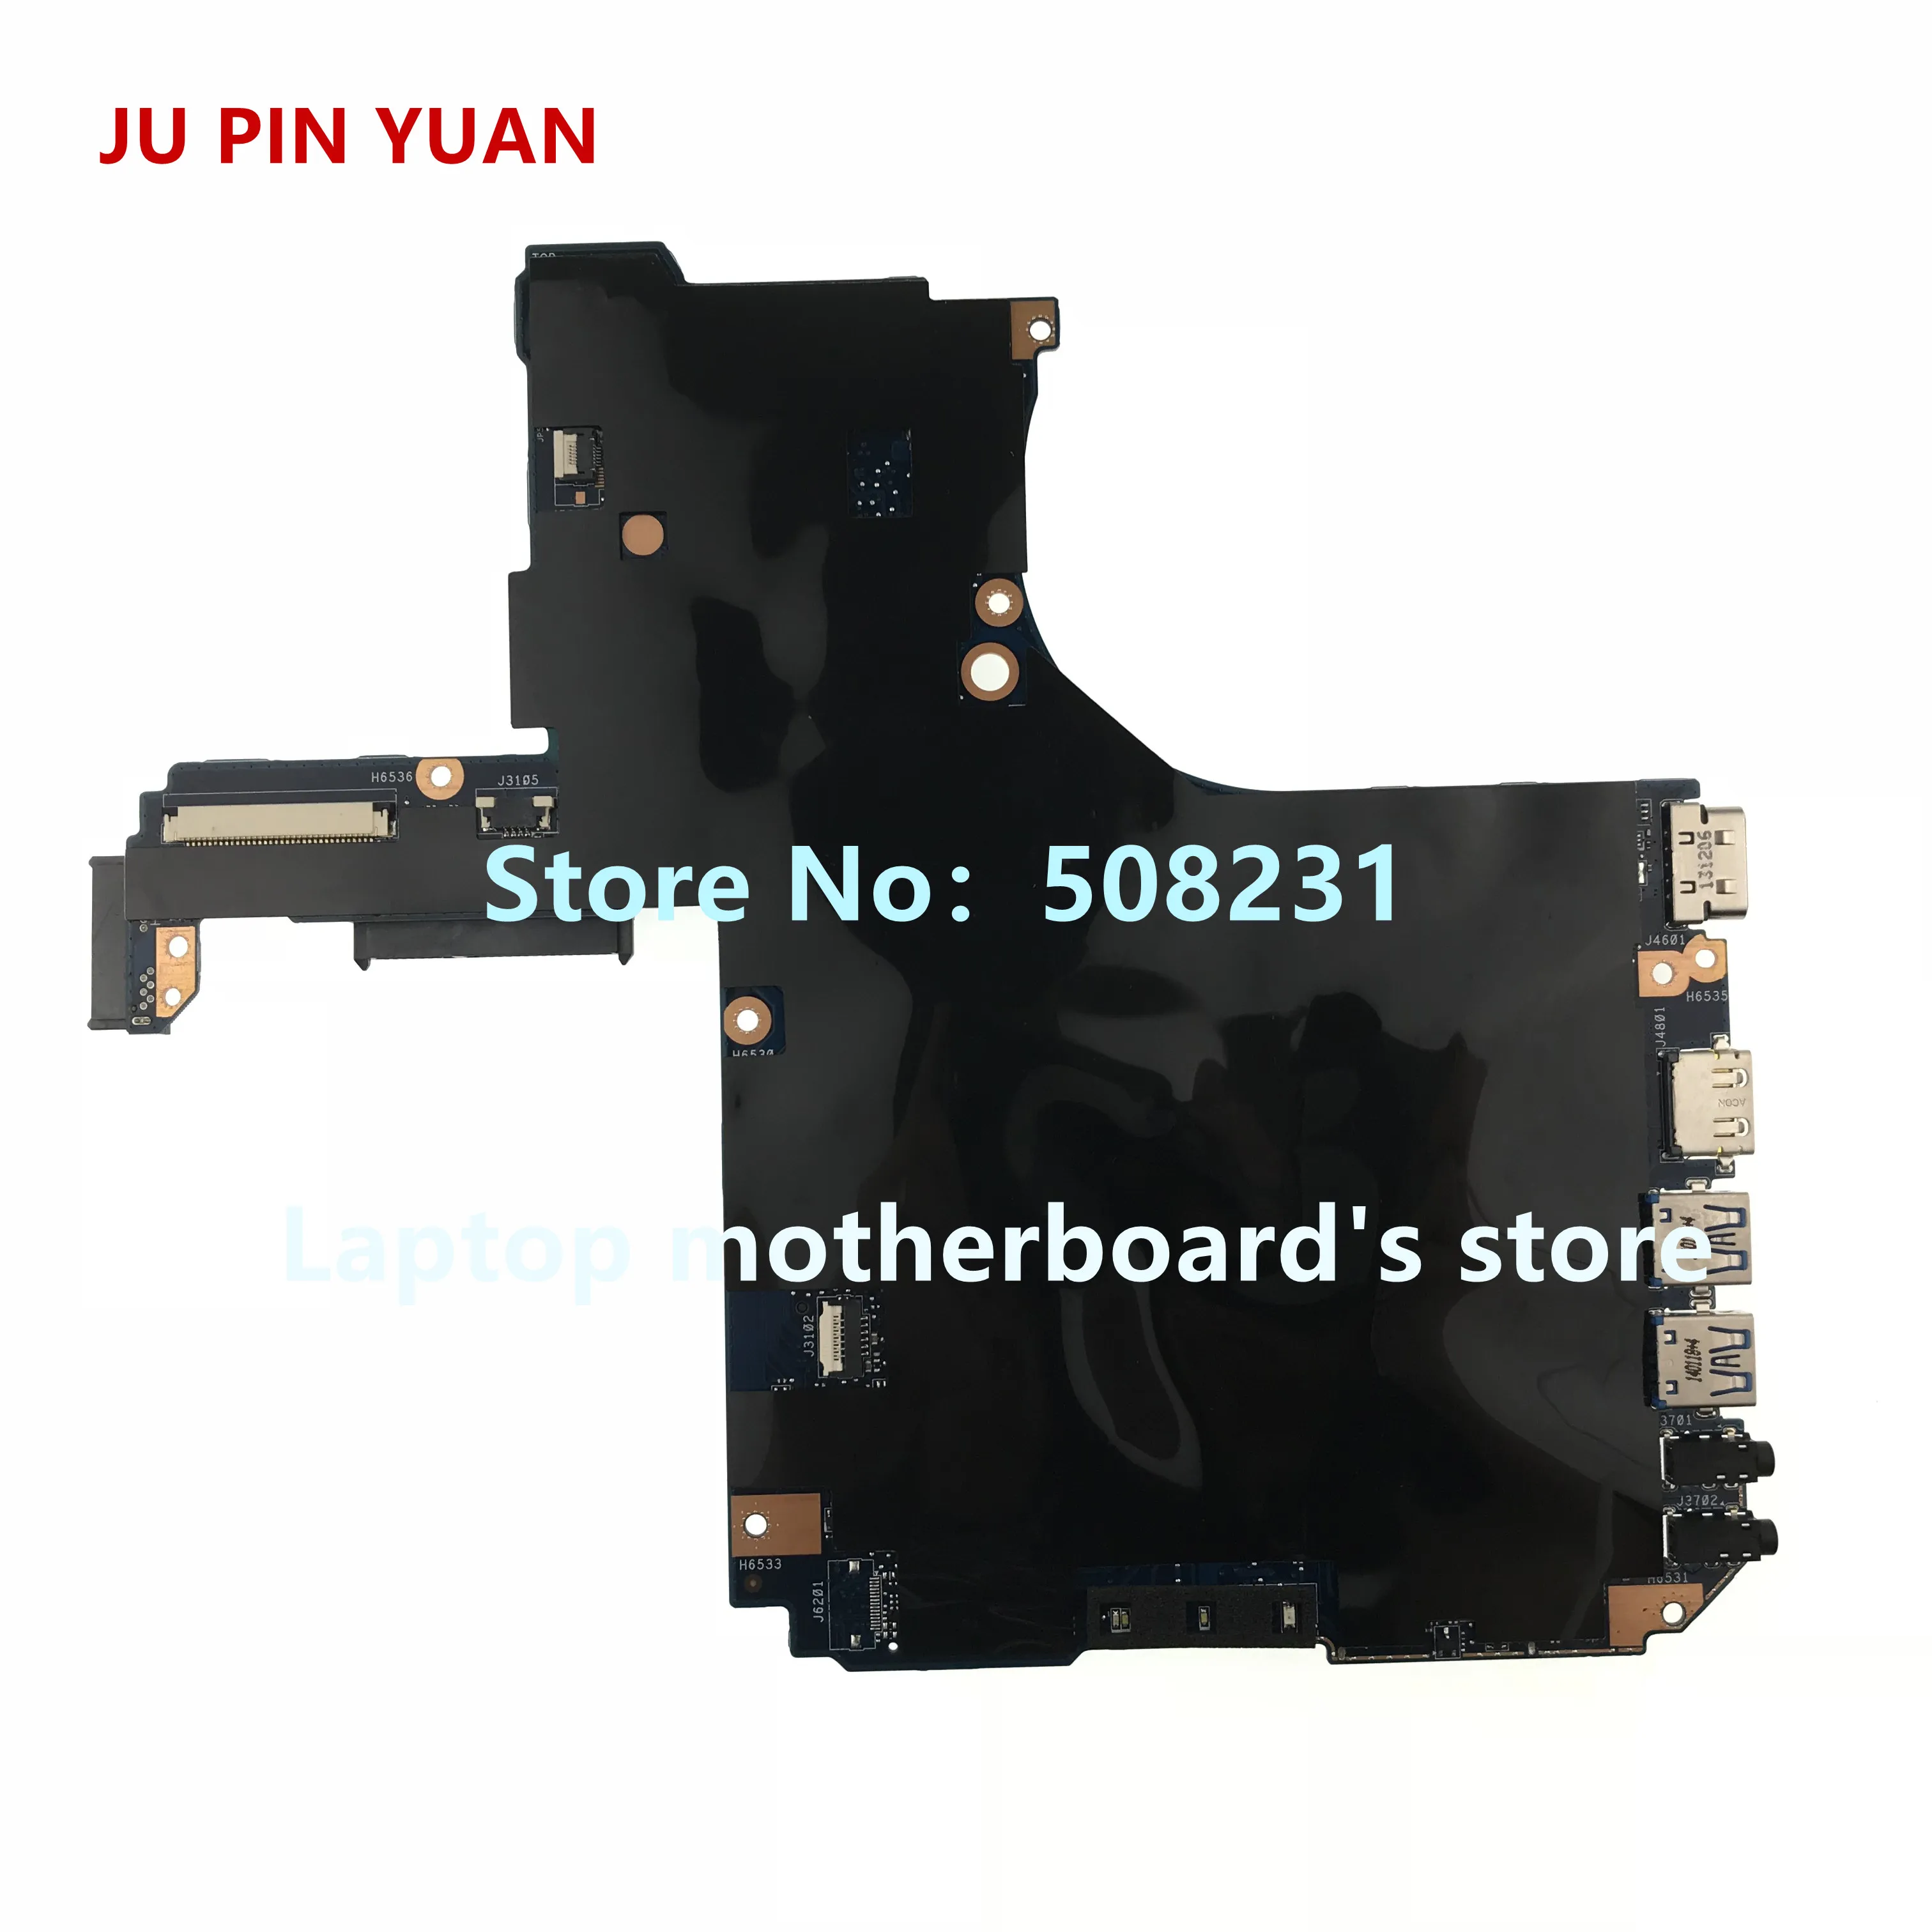 Ju pin yuan  Toshiba Satellite S55 S55t-a5132     H000072350    PGA 947